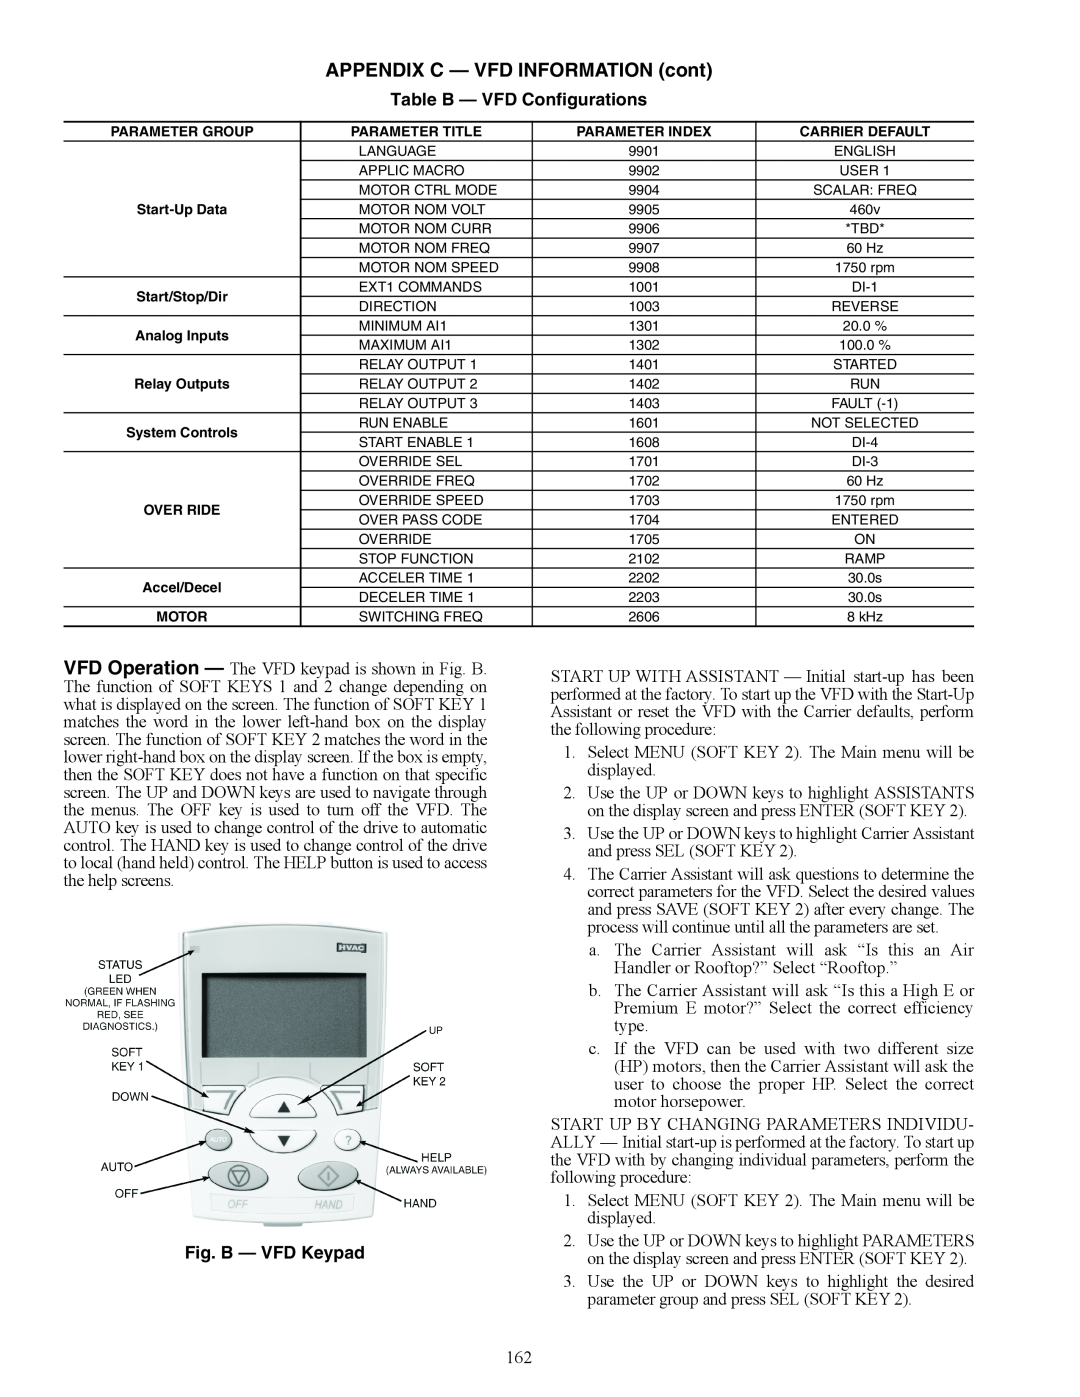 Carrier 48/50AJ specifications APPENDIX C — VFD INFORMATION cont, Table B — VFD Configurations, Fig. B — VFD Keypad 